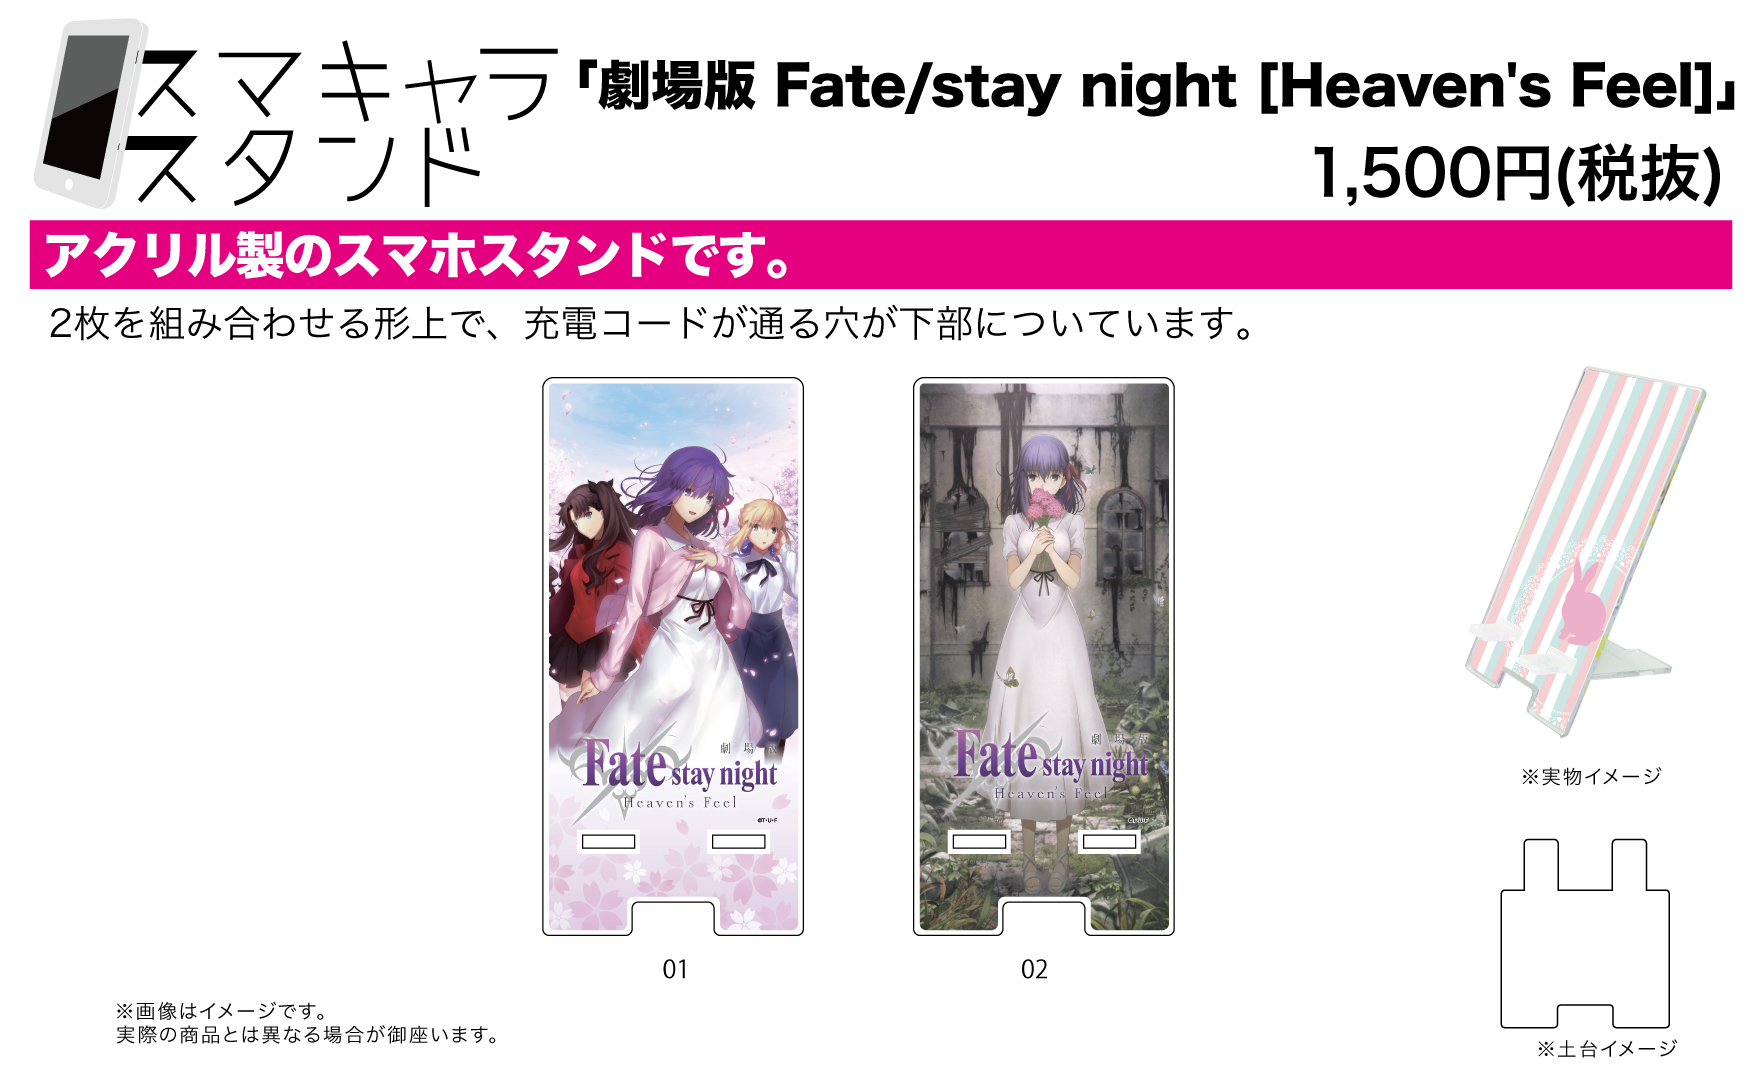 【B】剧场版 Fate/stay night [Heavens Feel] 手机座